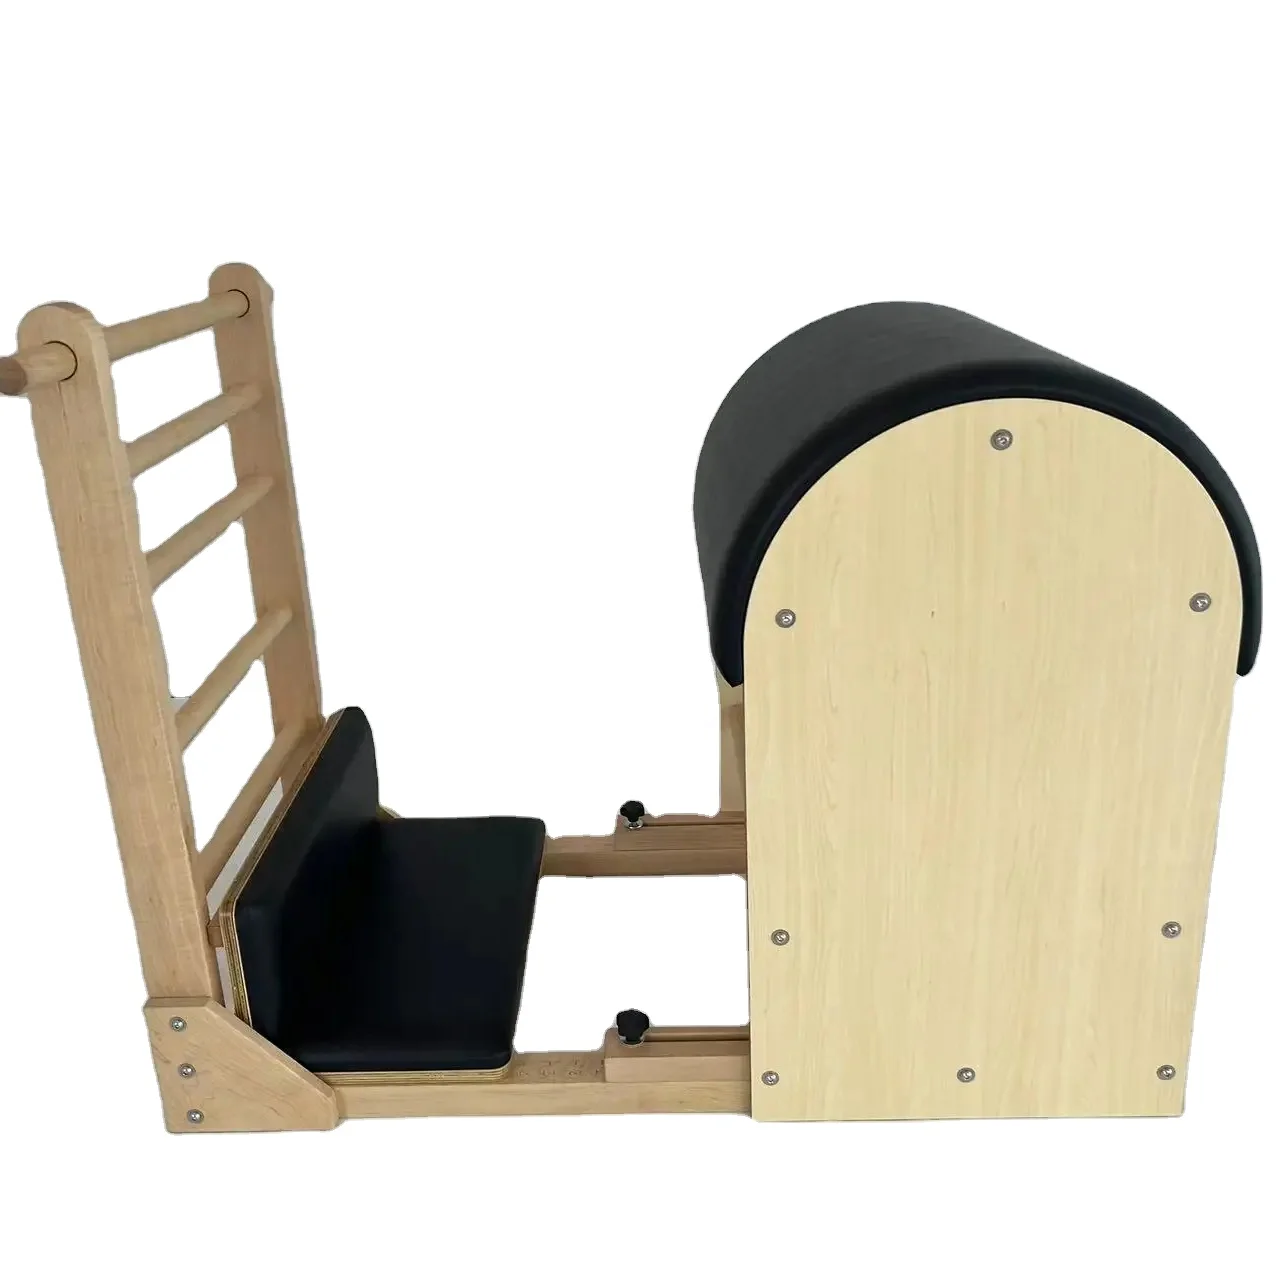 

Wooden maple gym fitness hybrid equipment sale reformer pilates ladder barrel